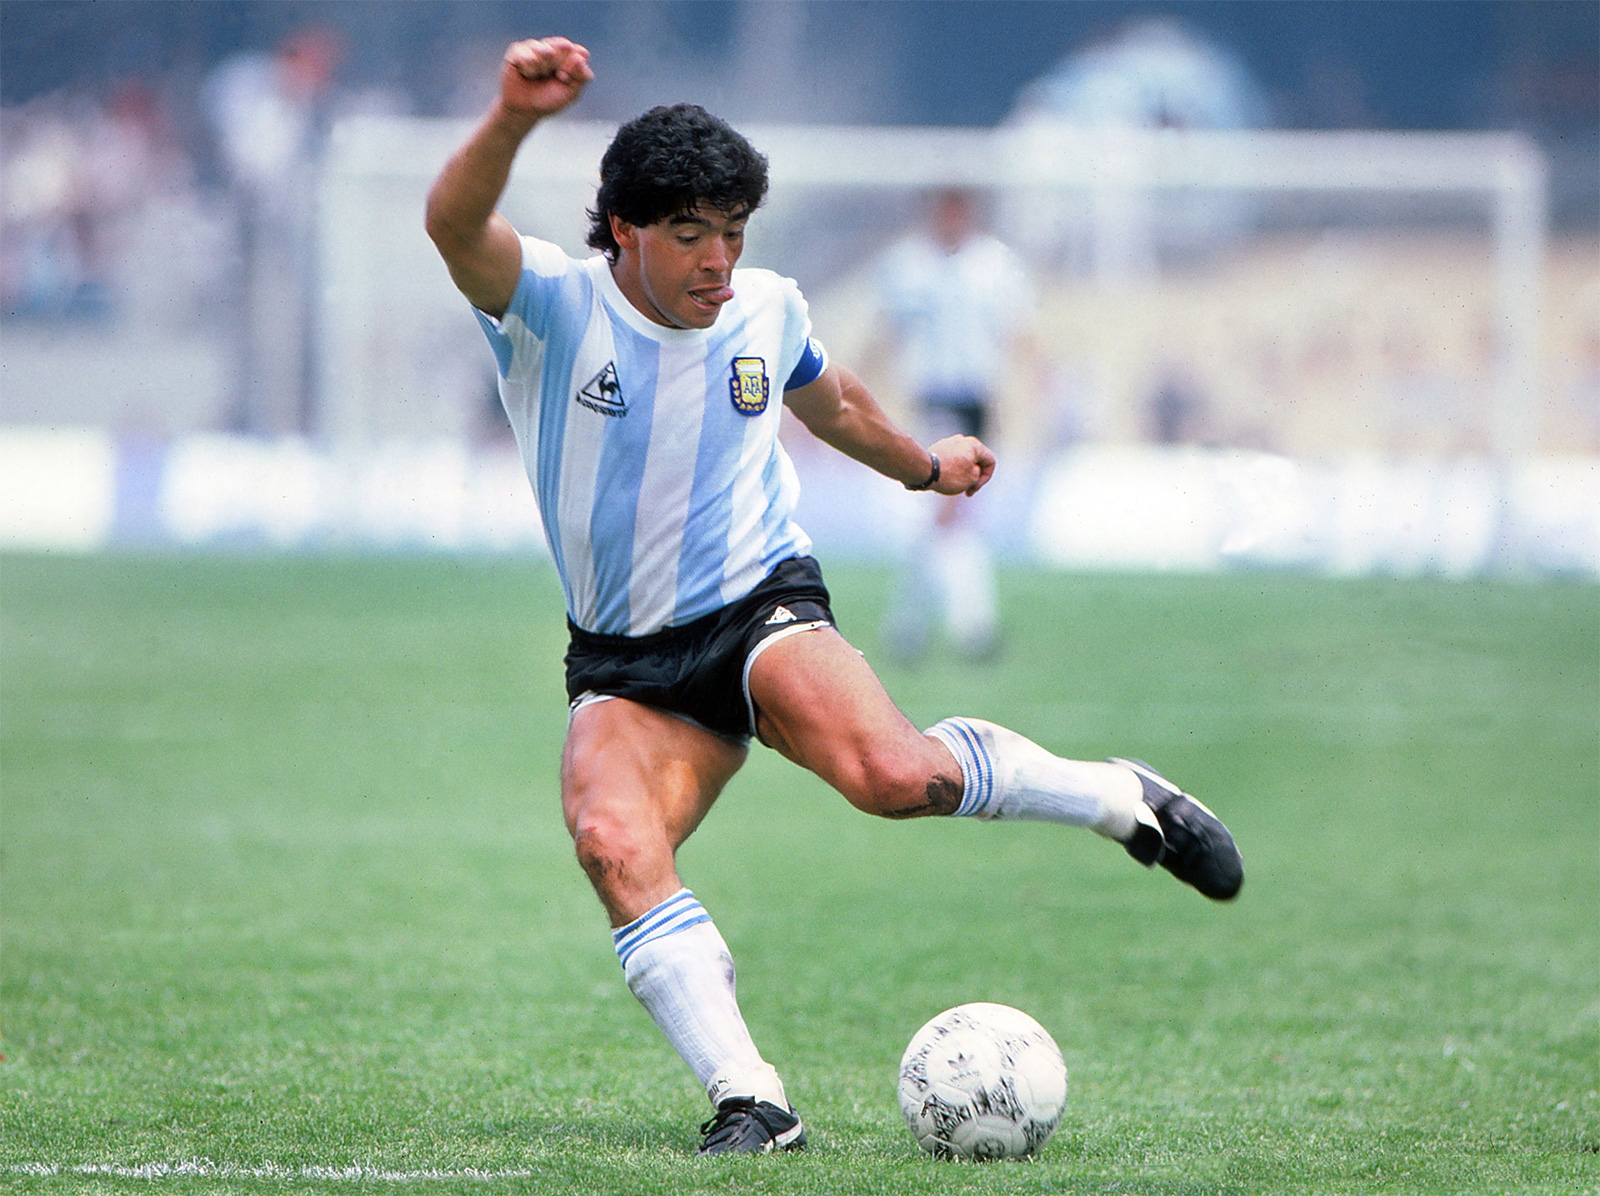 Diego Maradona's biography: Early life and career